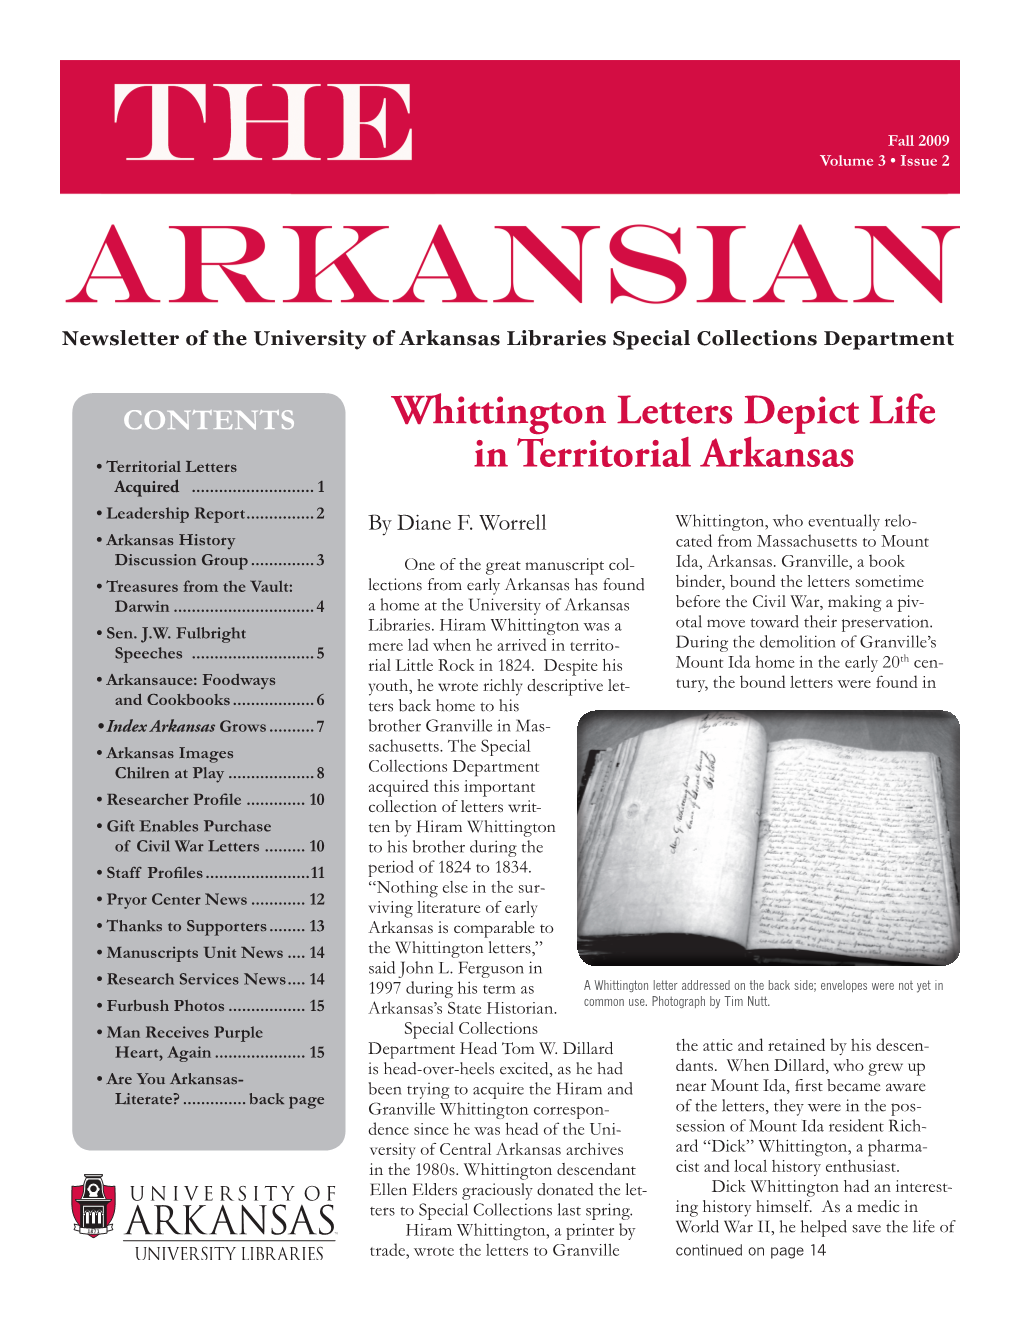 Whittington Letters Depict Life in Territorial Arkansas